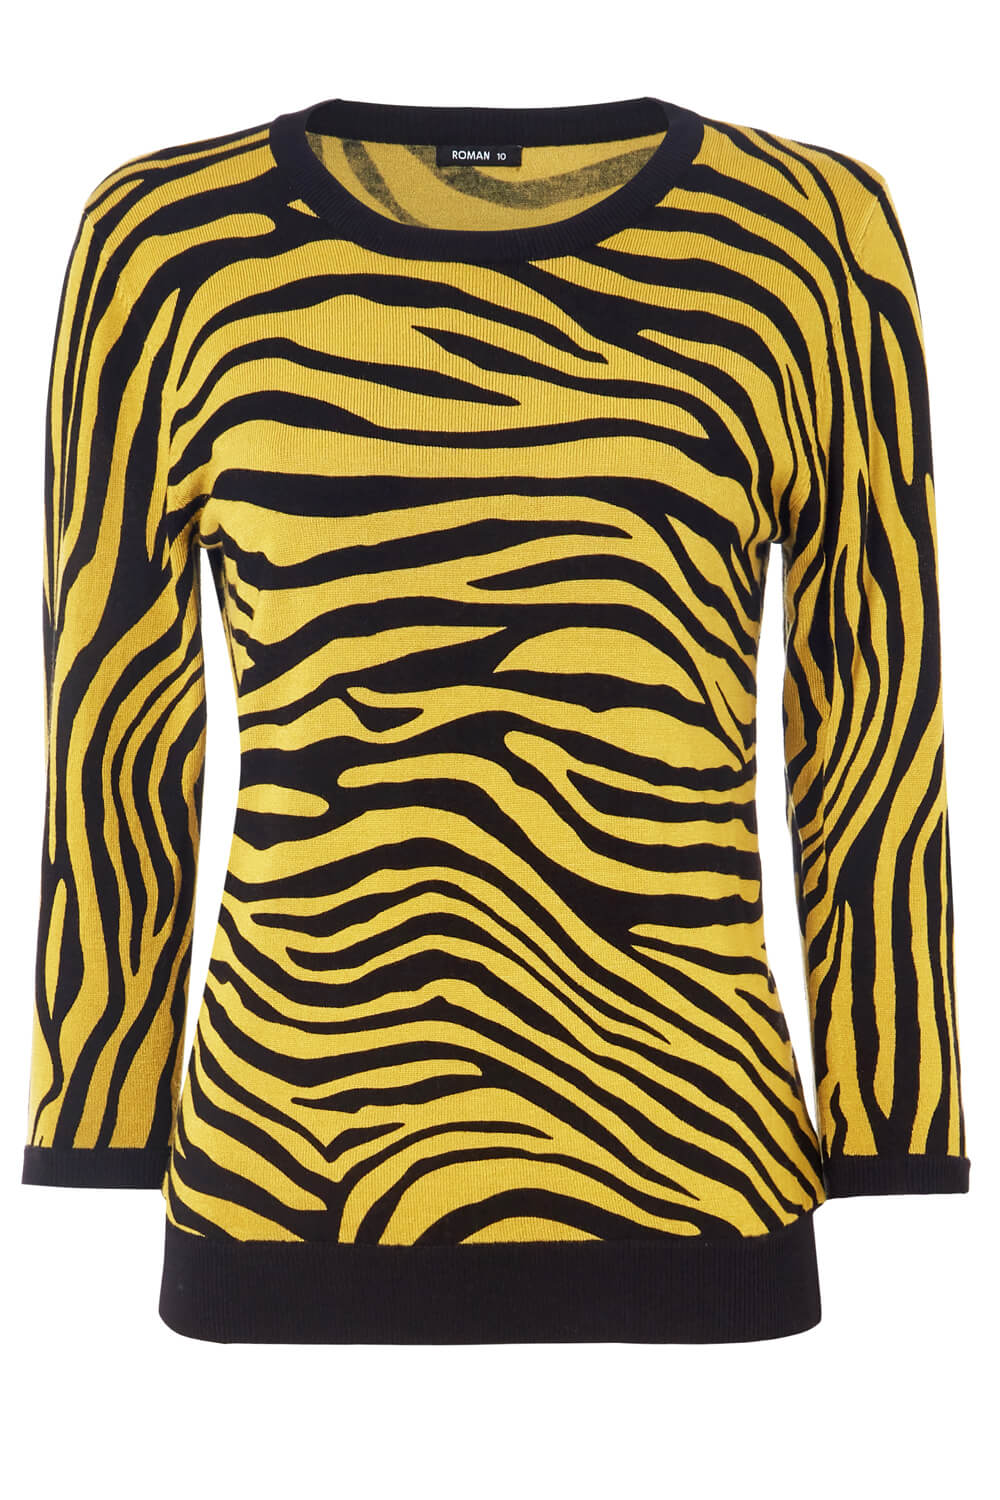 zebra pattern jumper